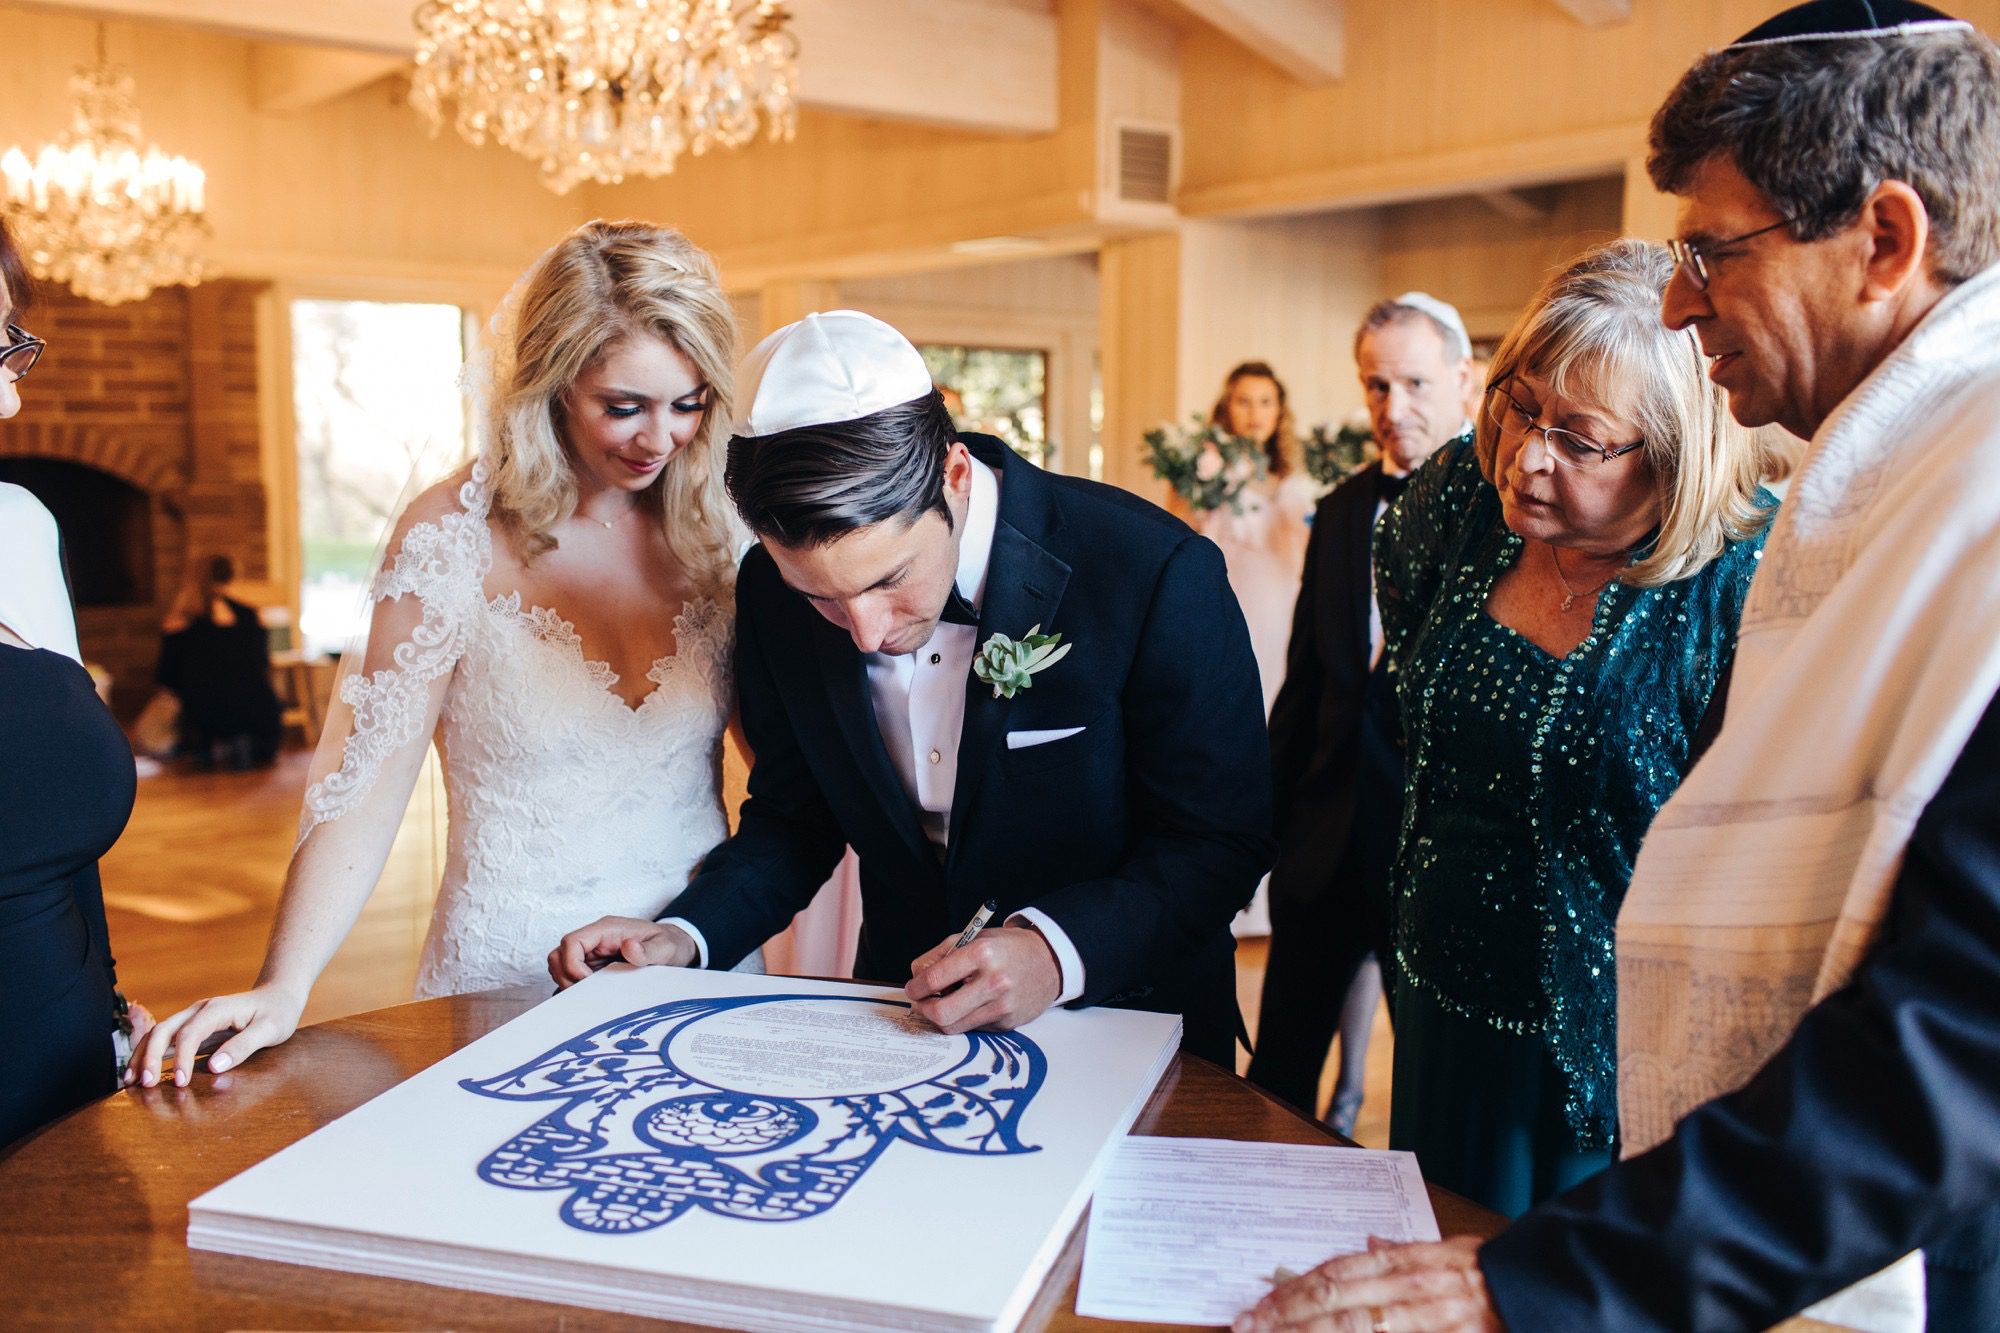 Bride and Groom at Jewish wedding signing the ketubah